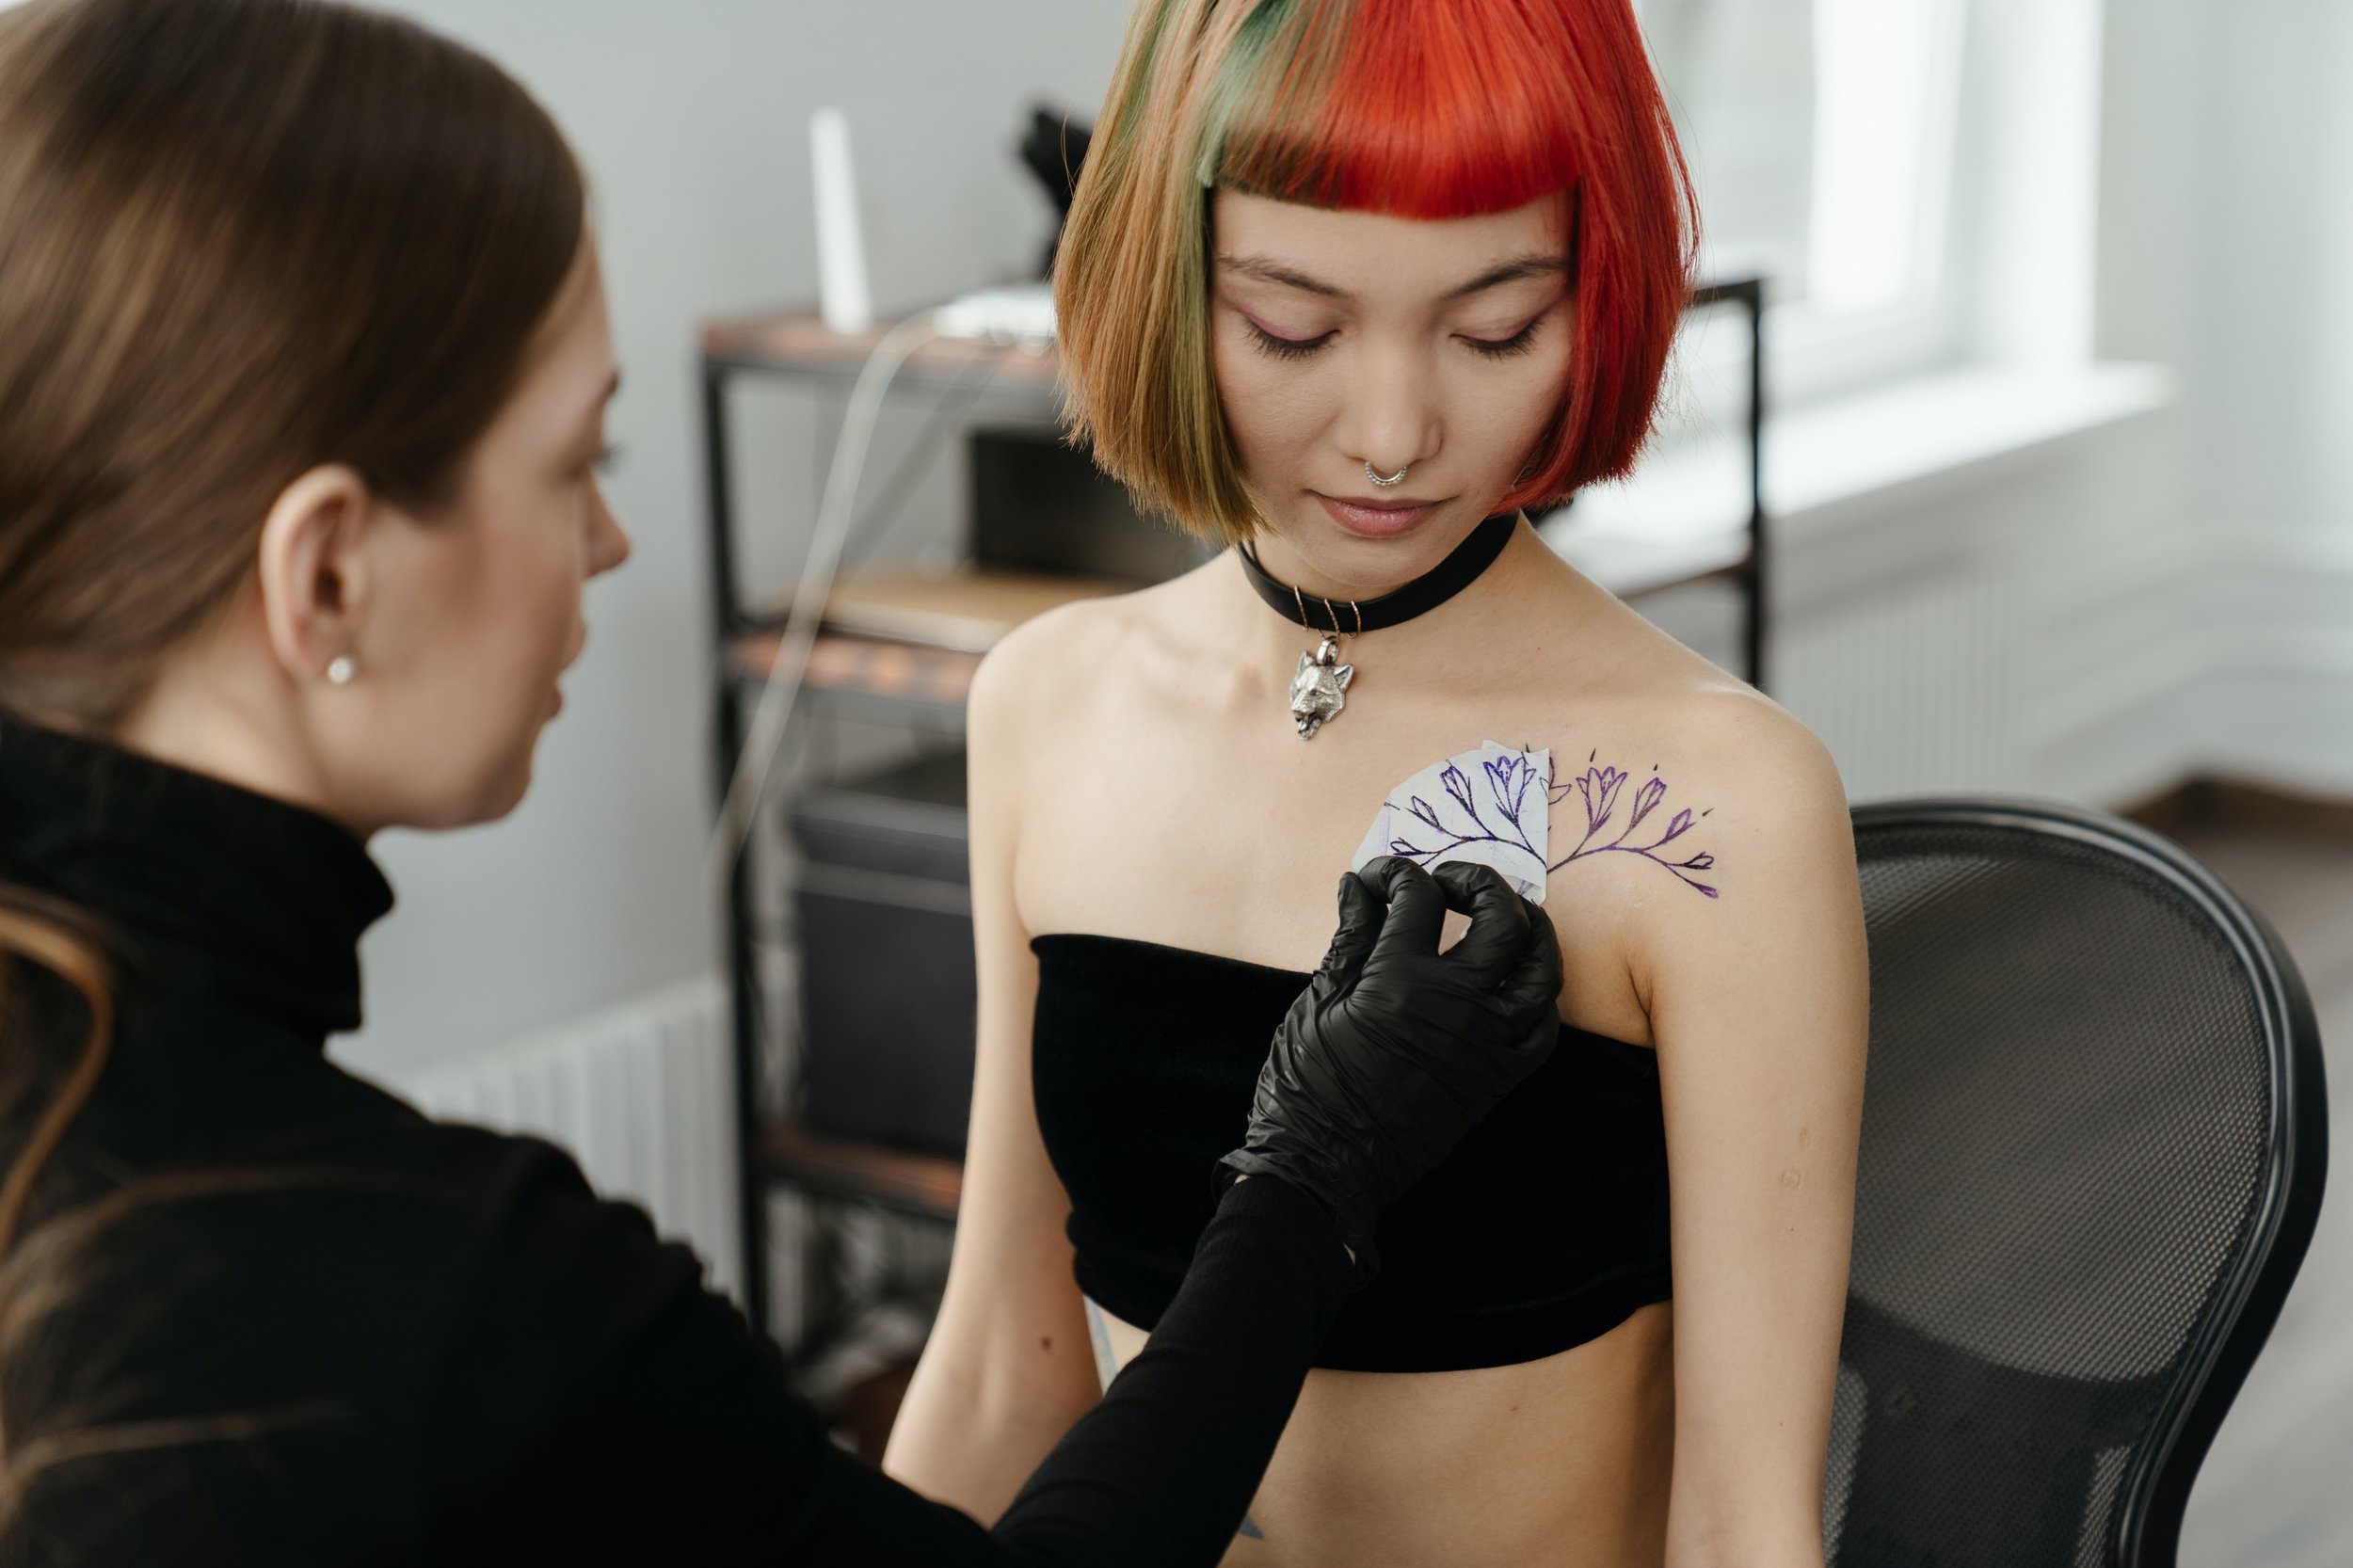 Dotwork Symbolic Flower tattoo on leg - Best Tattoo Ideas Gallery